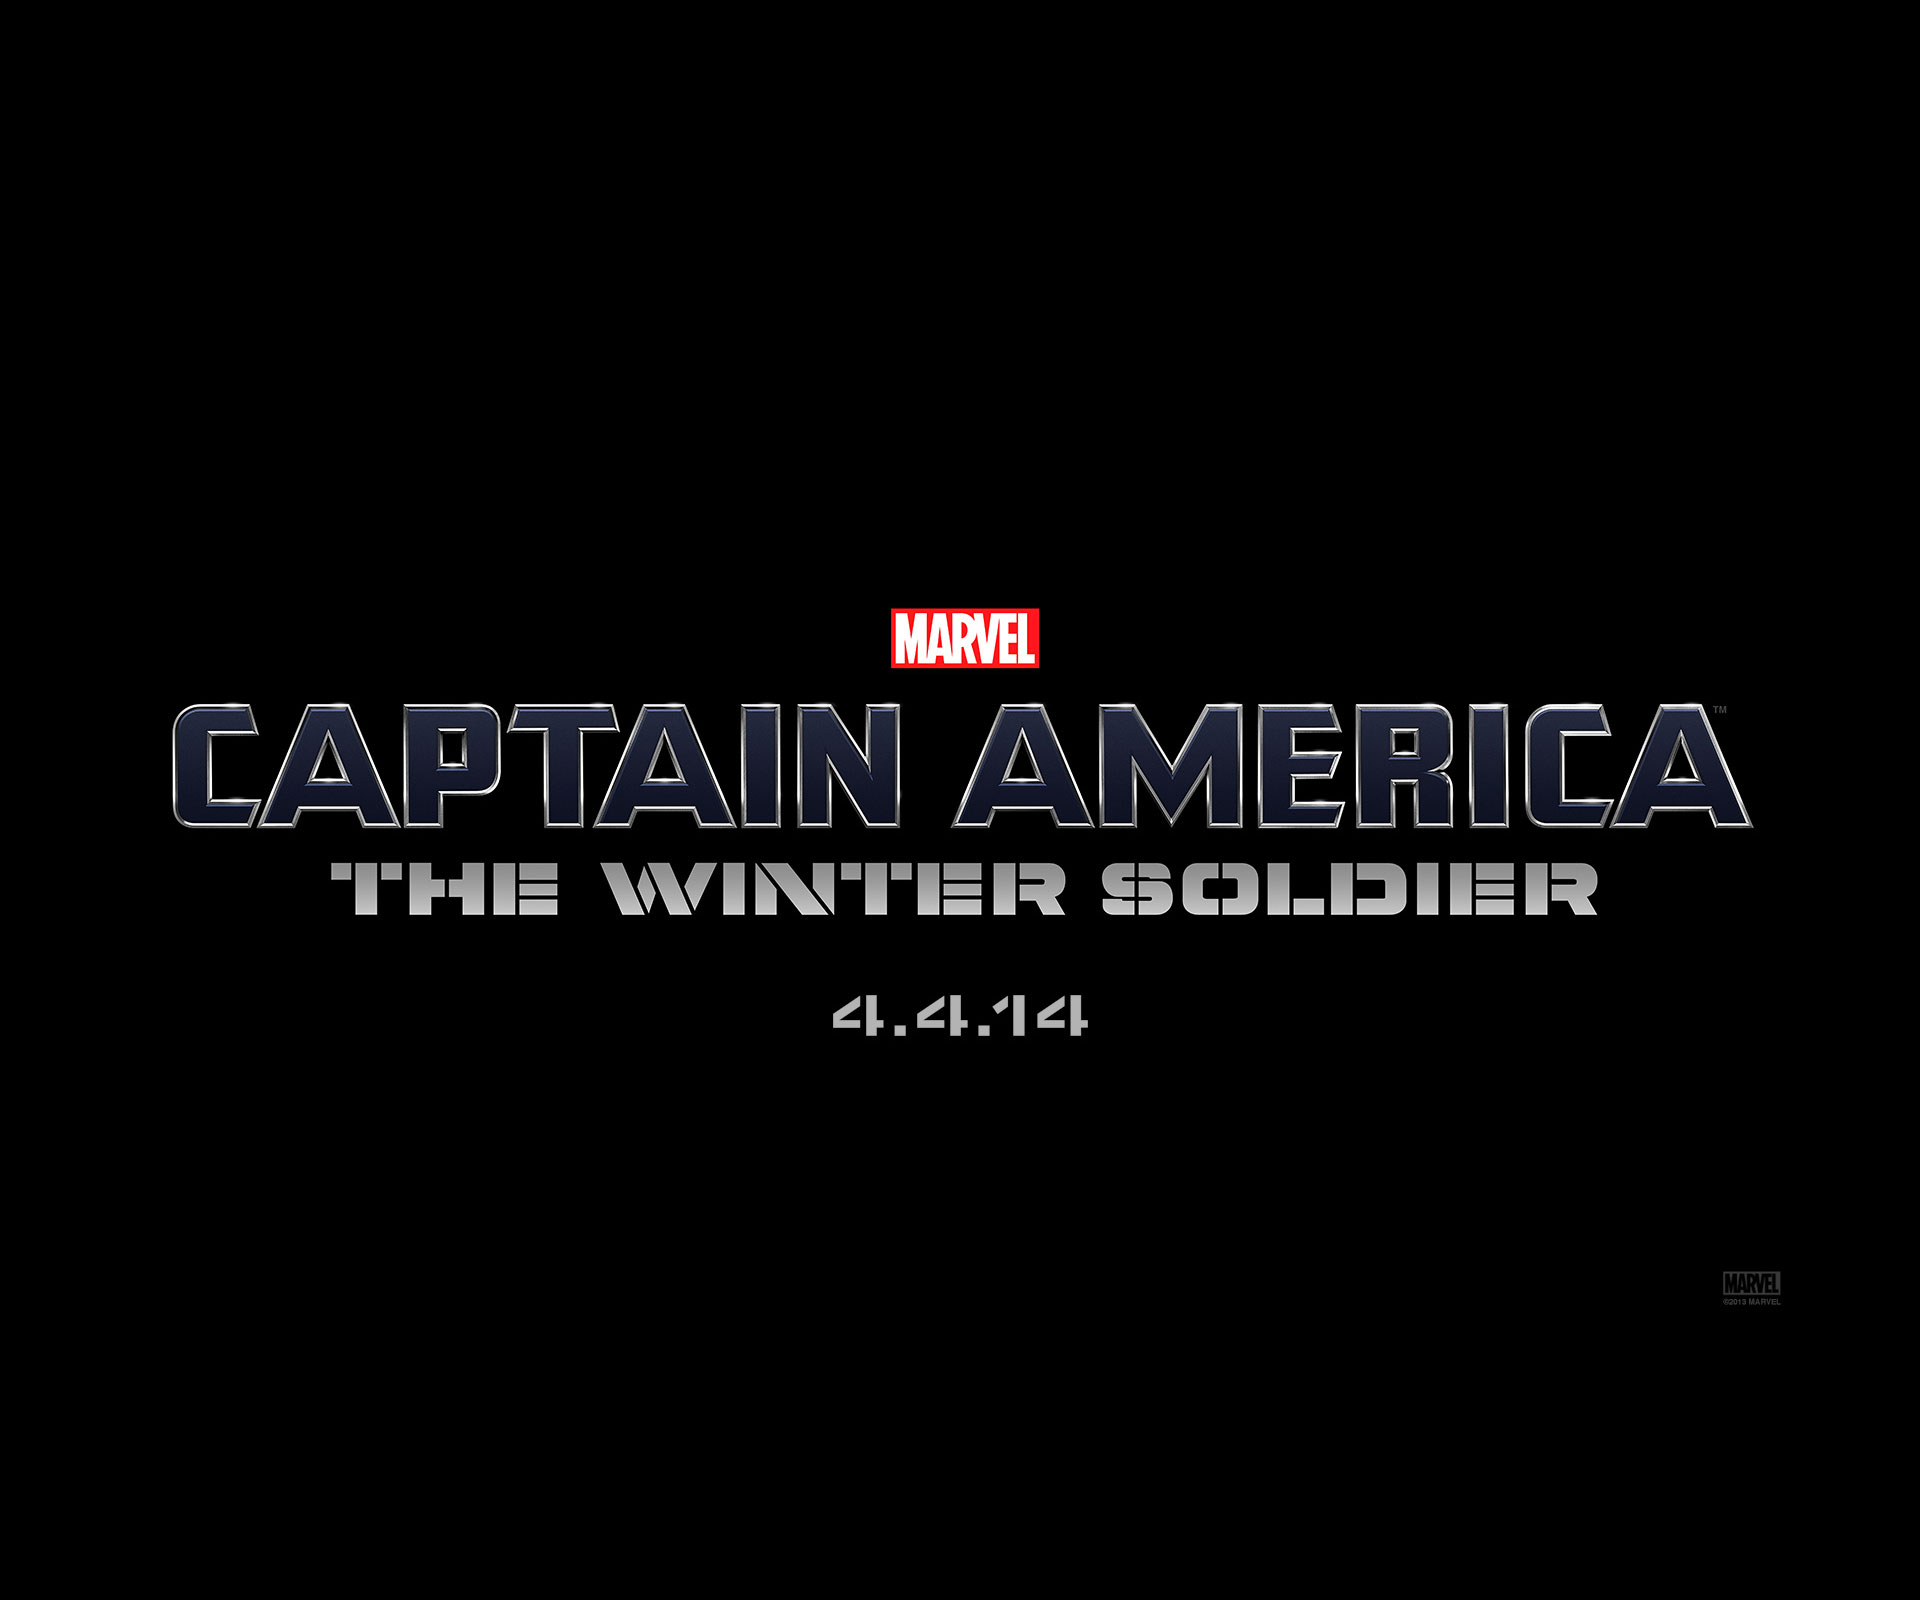 Wallpaper - Captain America 'New Costume' Logo by Kalangozilla on DeviantArt